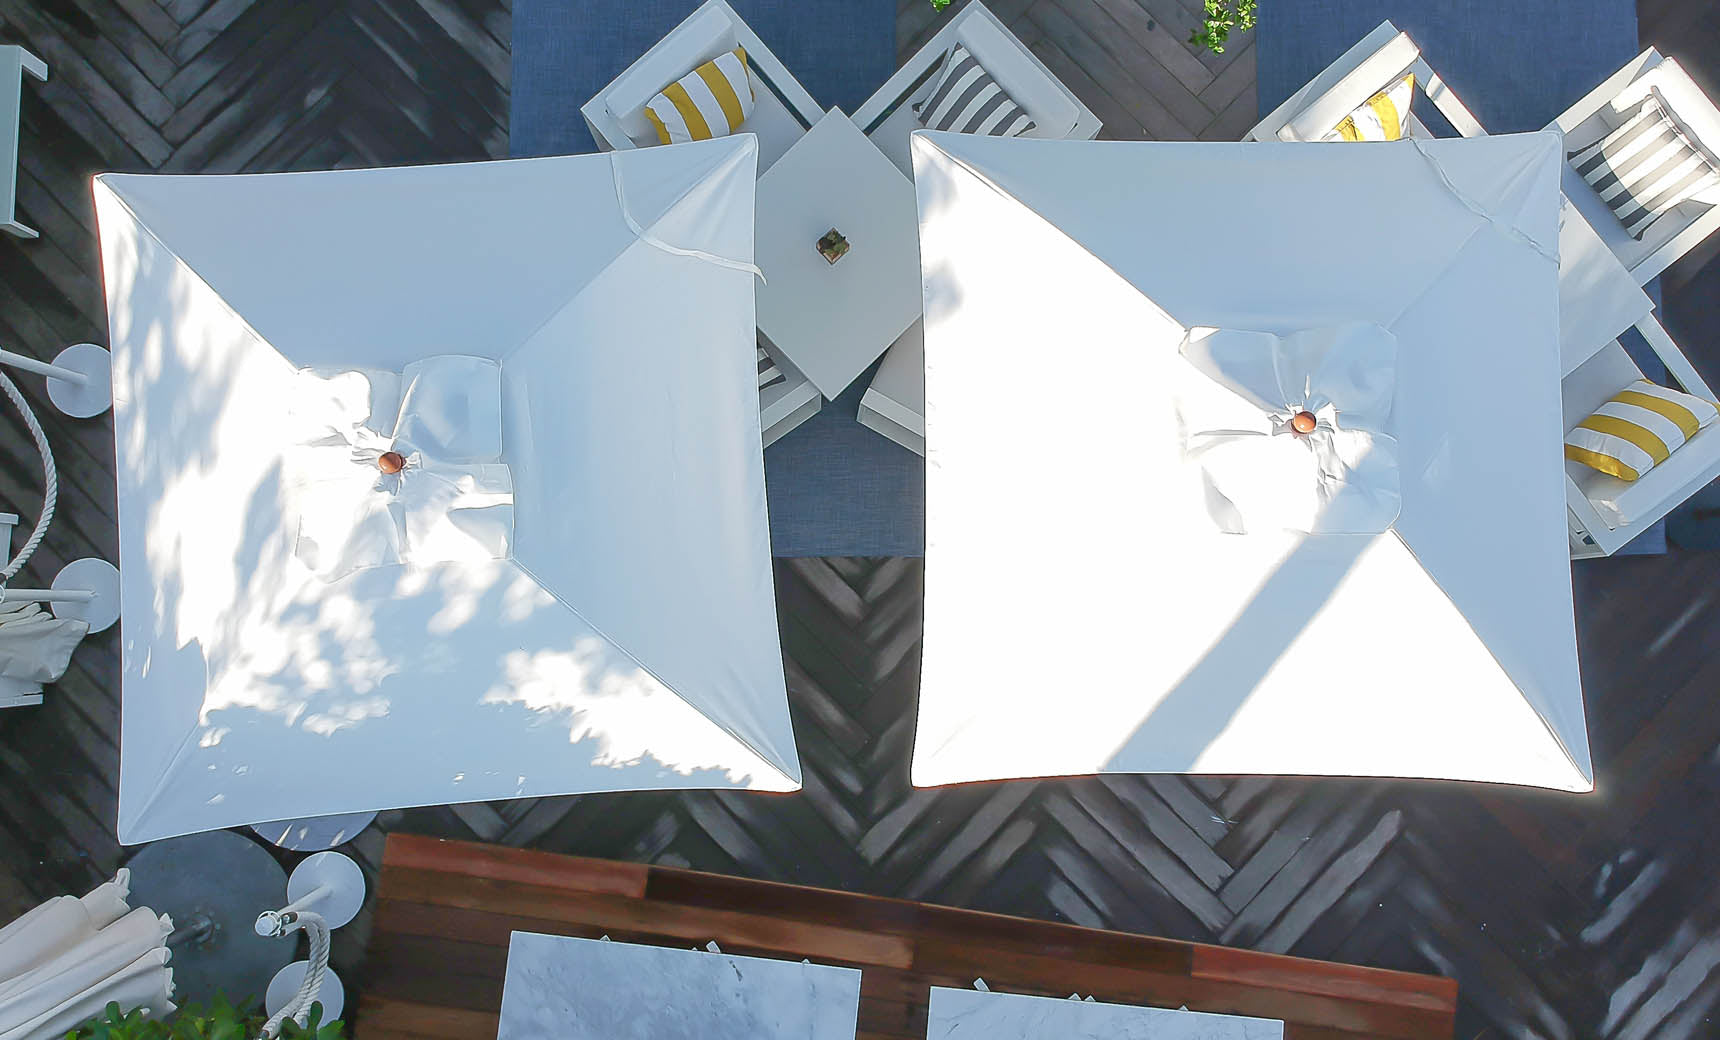 Essential Fiberglass Umbrella - 8.5' Rectangle Pulley